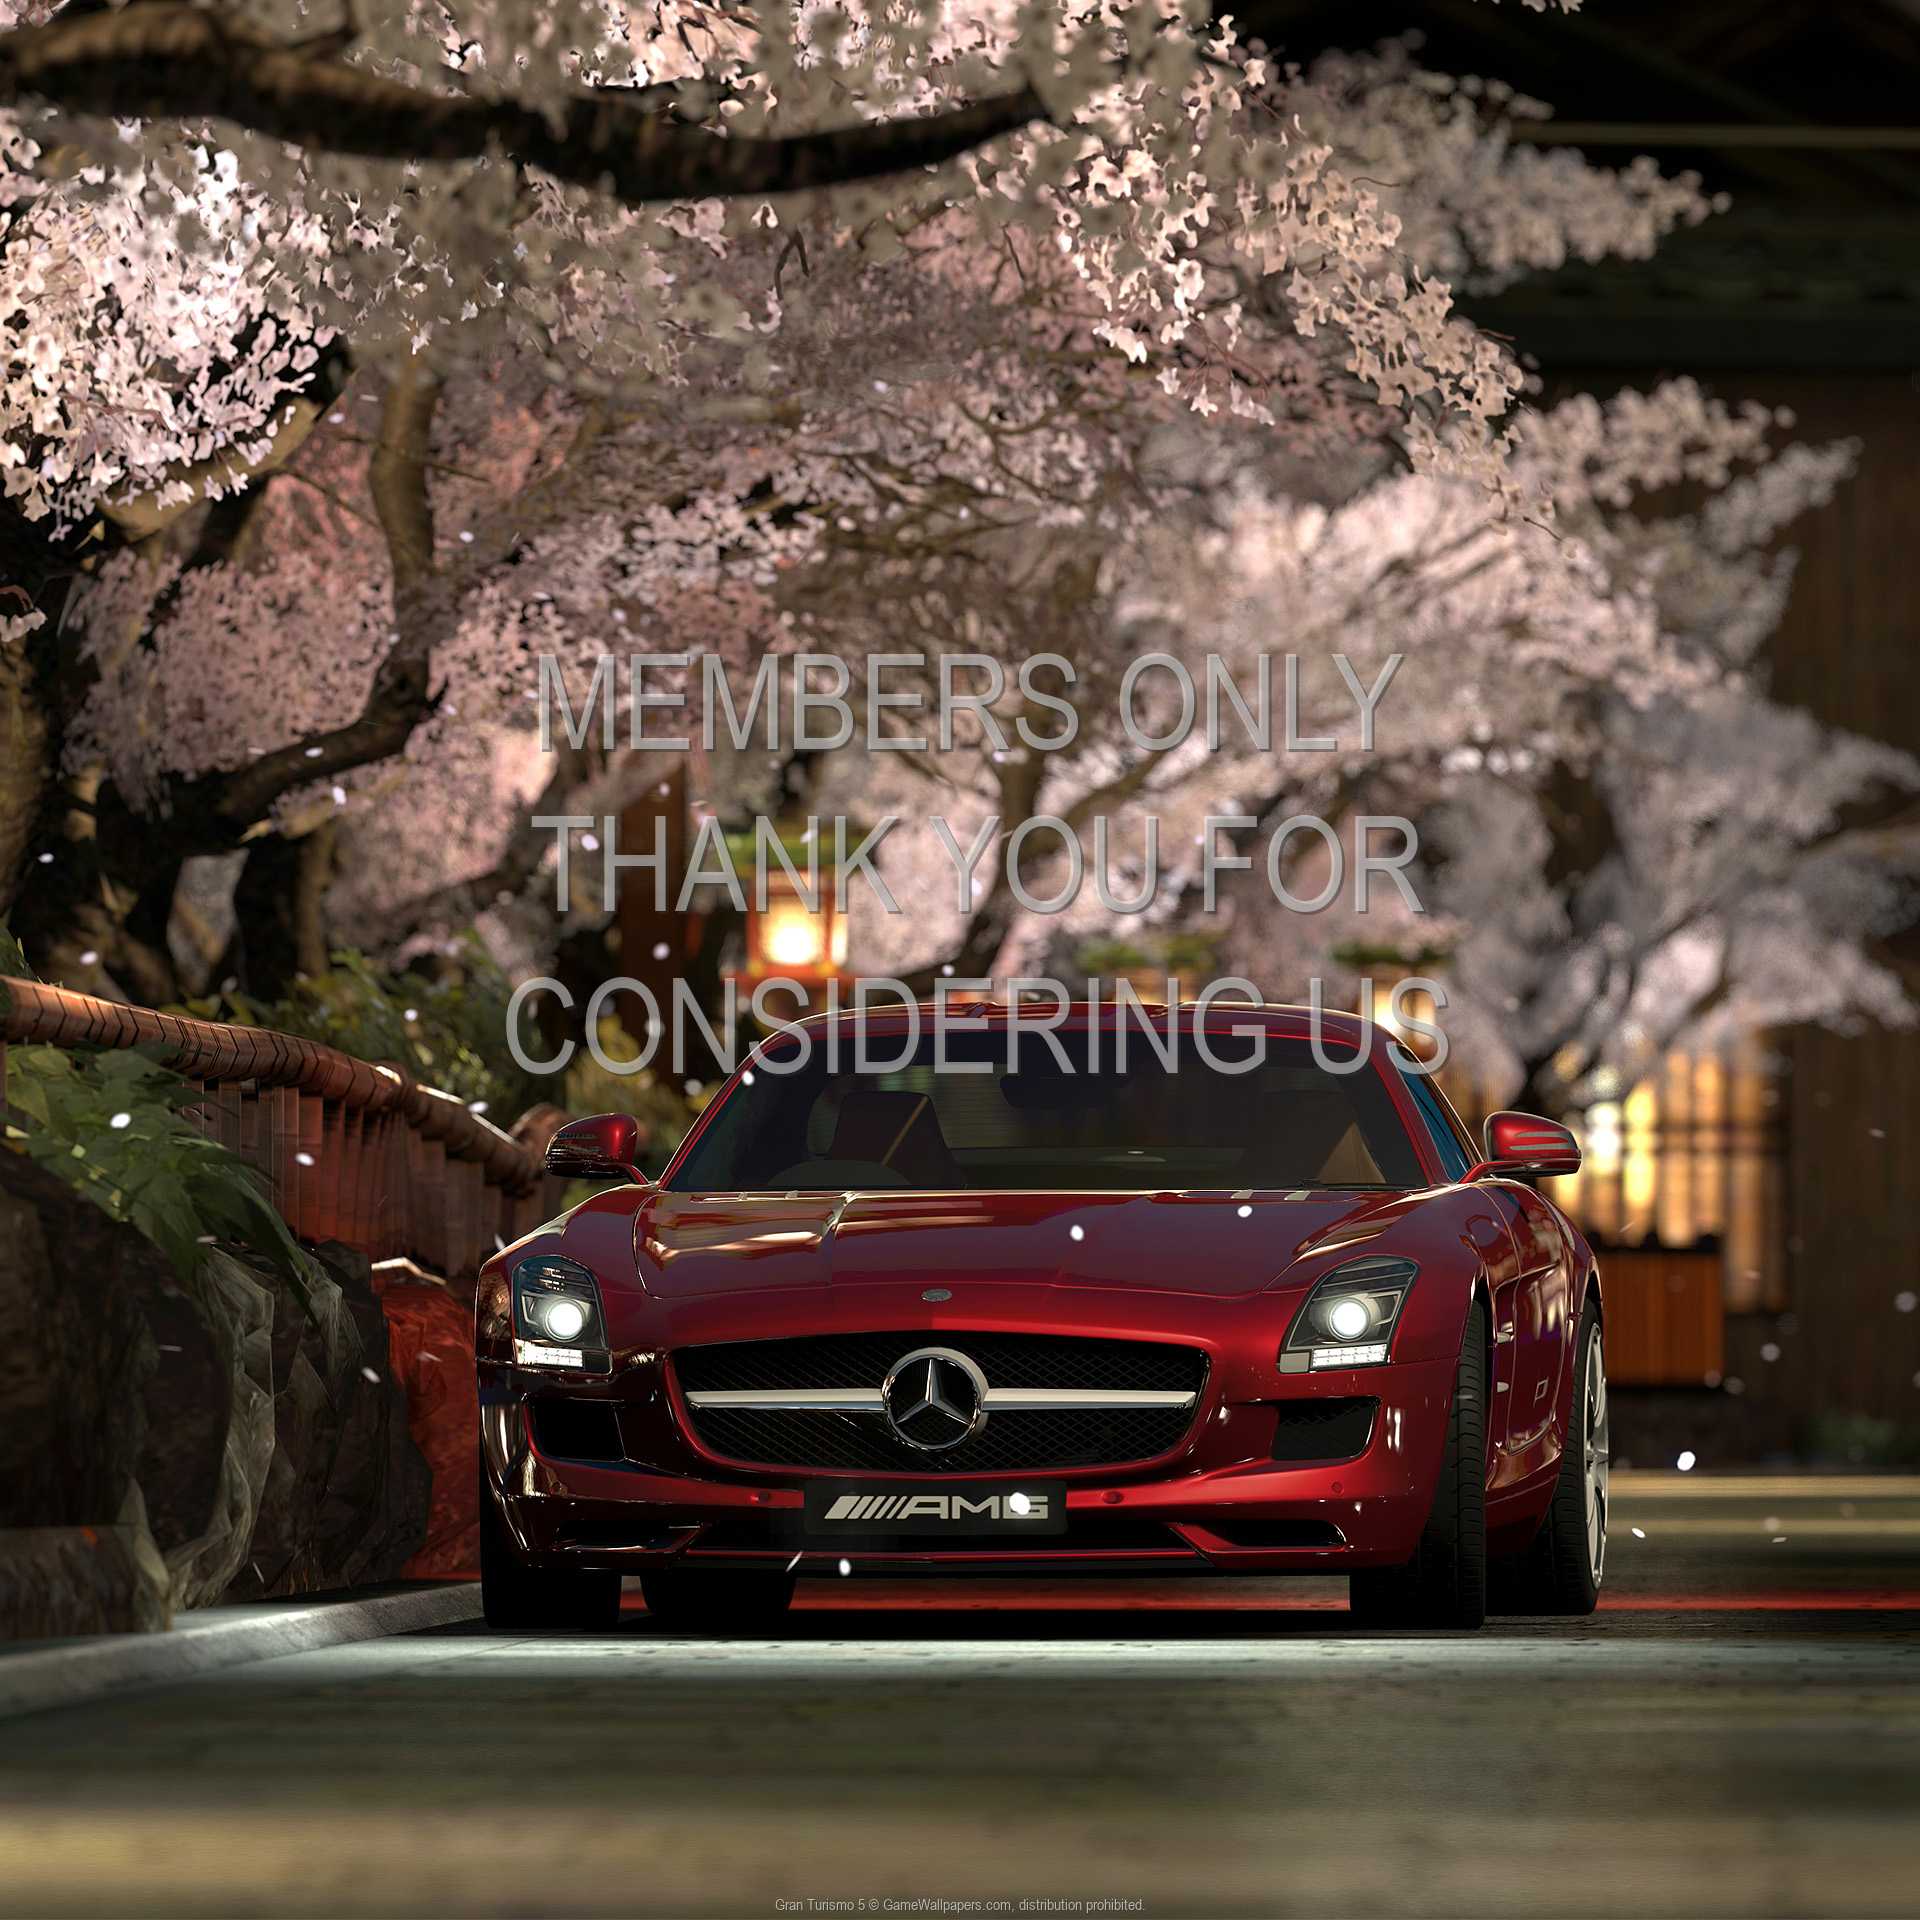 Gran Turismo 5 1080p Horizontal Mobile wallpaper or background 16